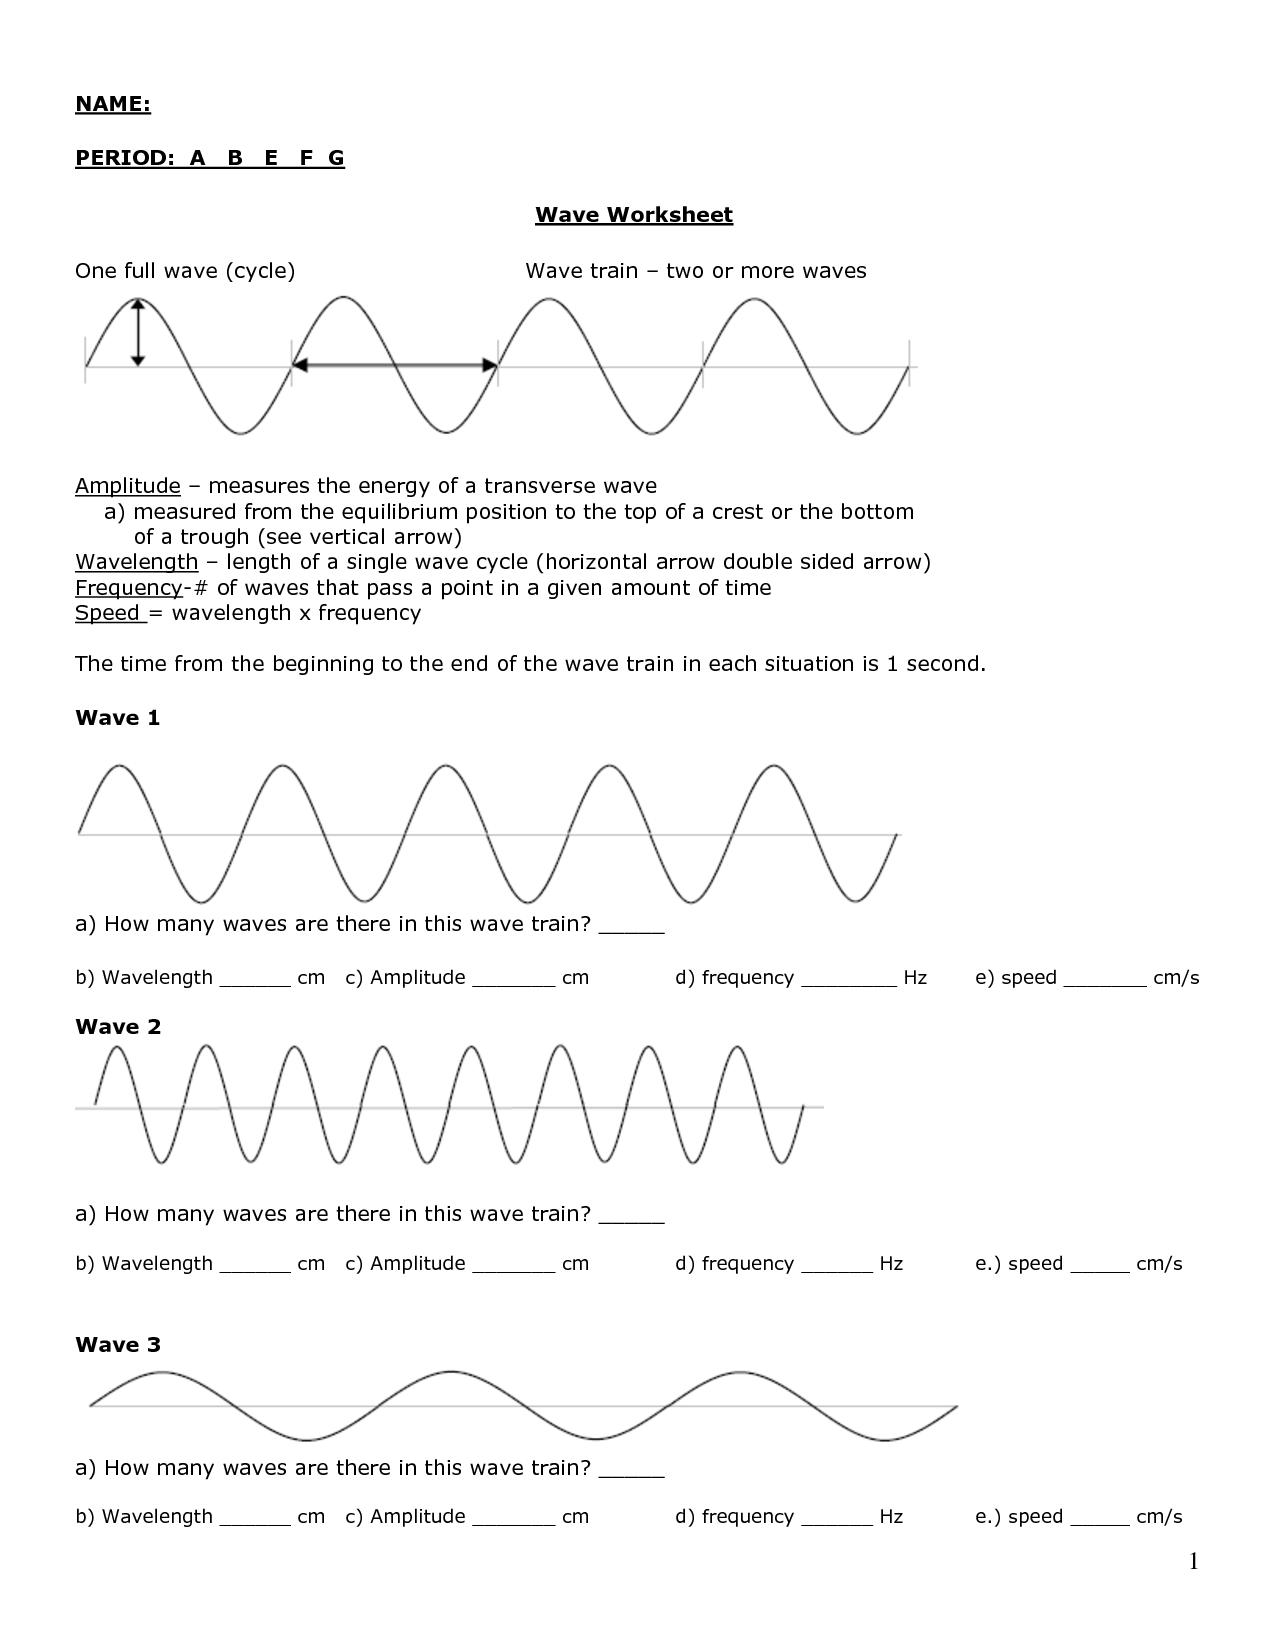 12-best-images-of-labeling-waves-worksheet-answer-key-1-17-labeling-waves-worksheet-answer-key